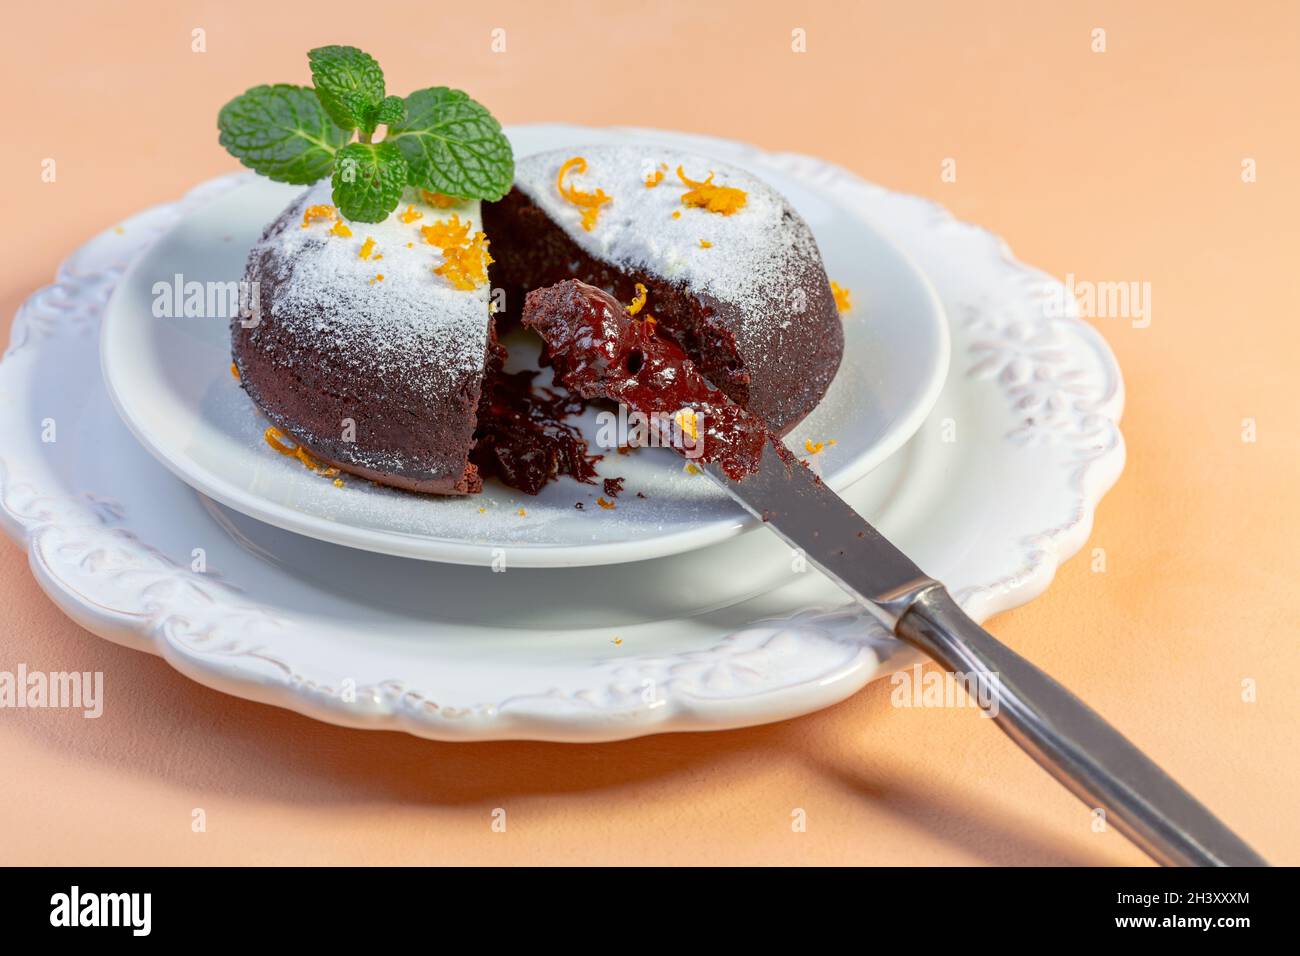 Chocolate cake with cocoa powder and orange peel. Stock Photo